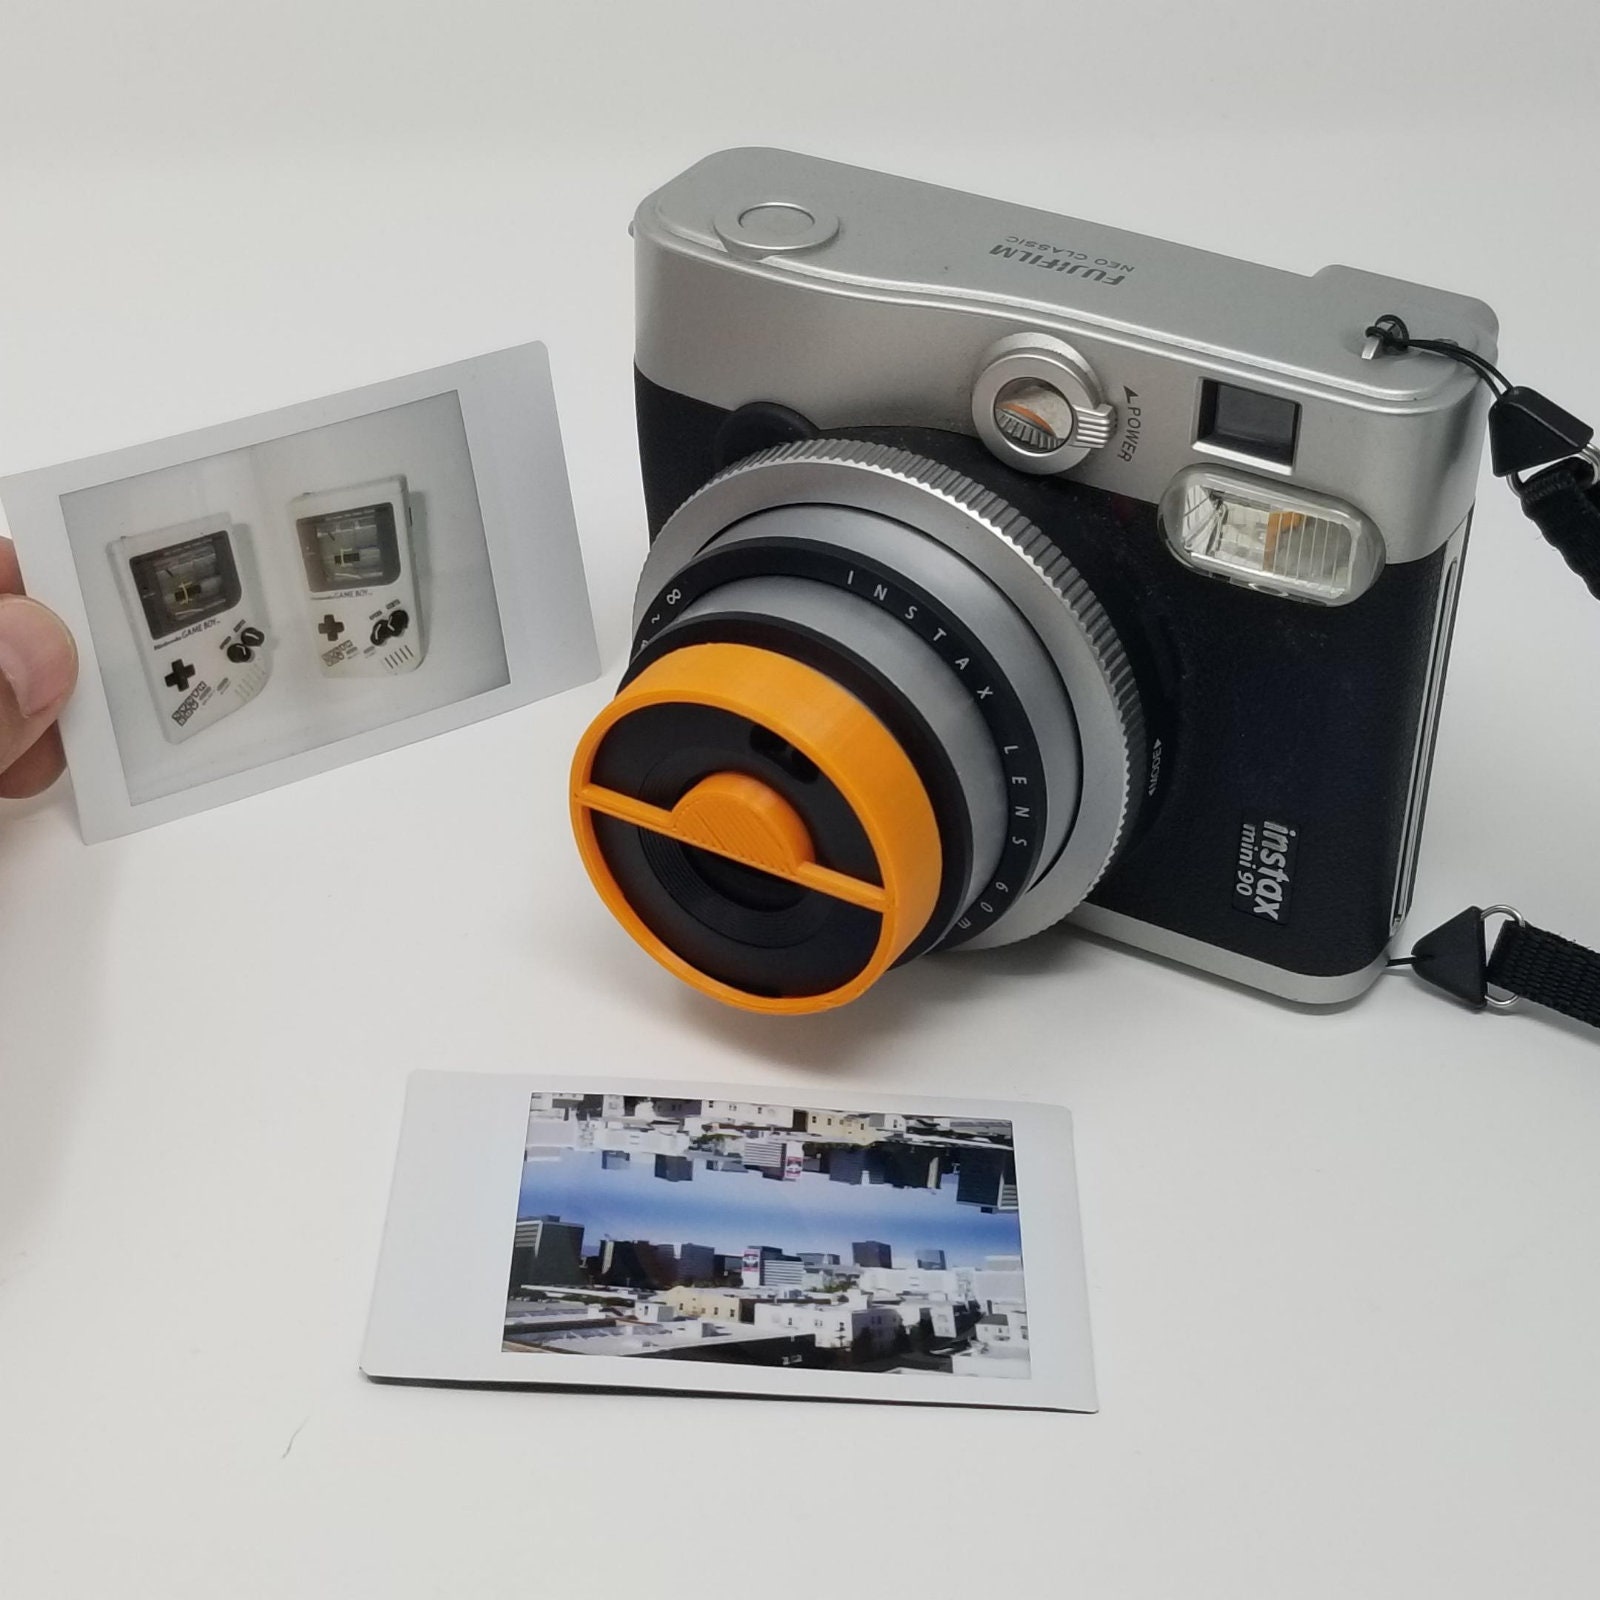  Instax Fujifilm Mini 90 Neo Classic Film Flash Camera